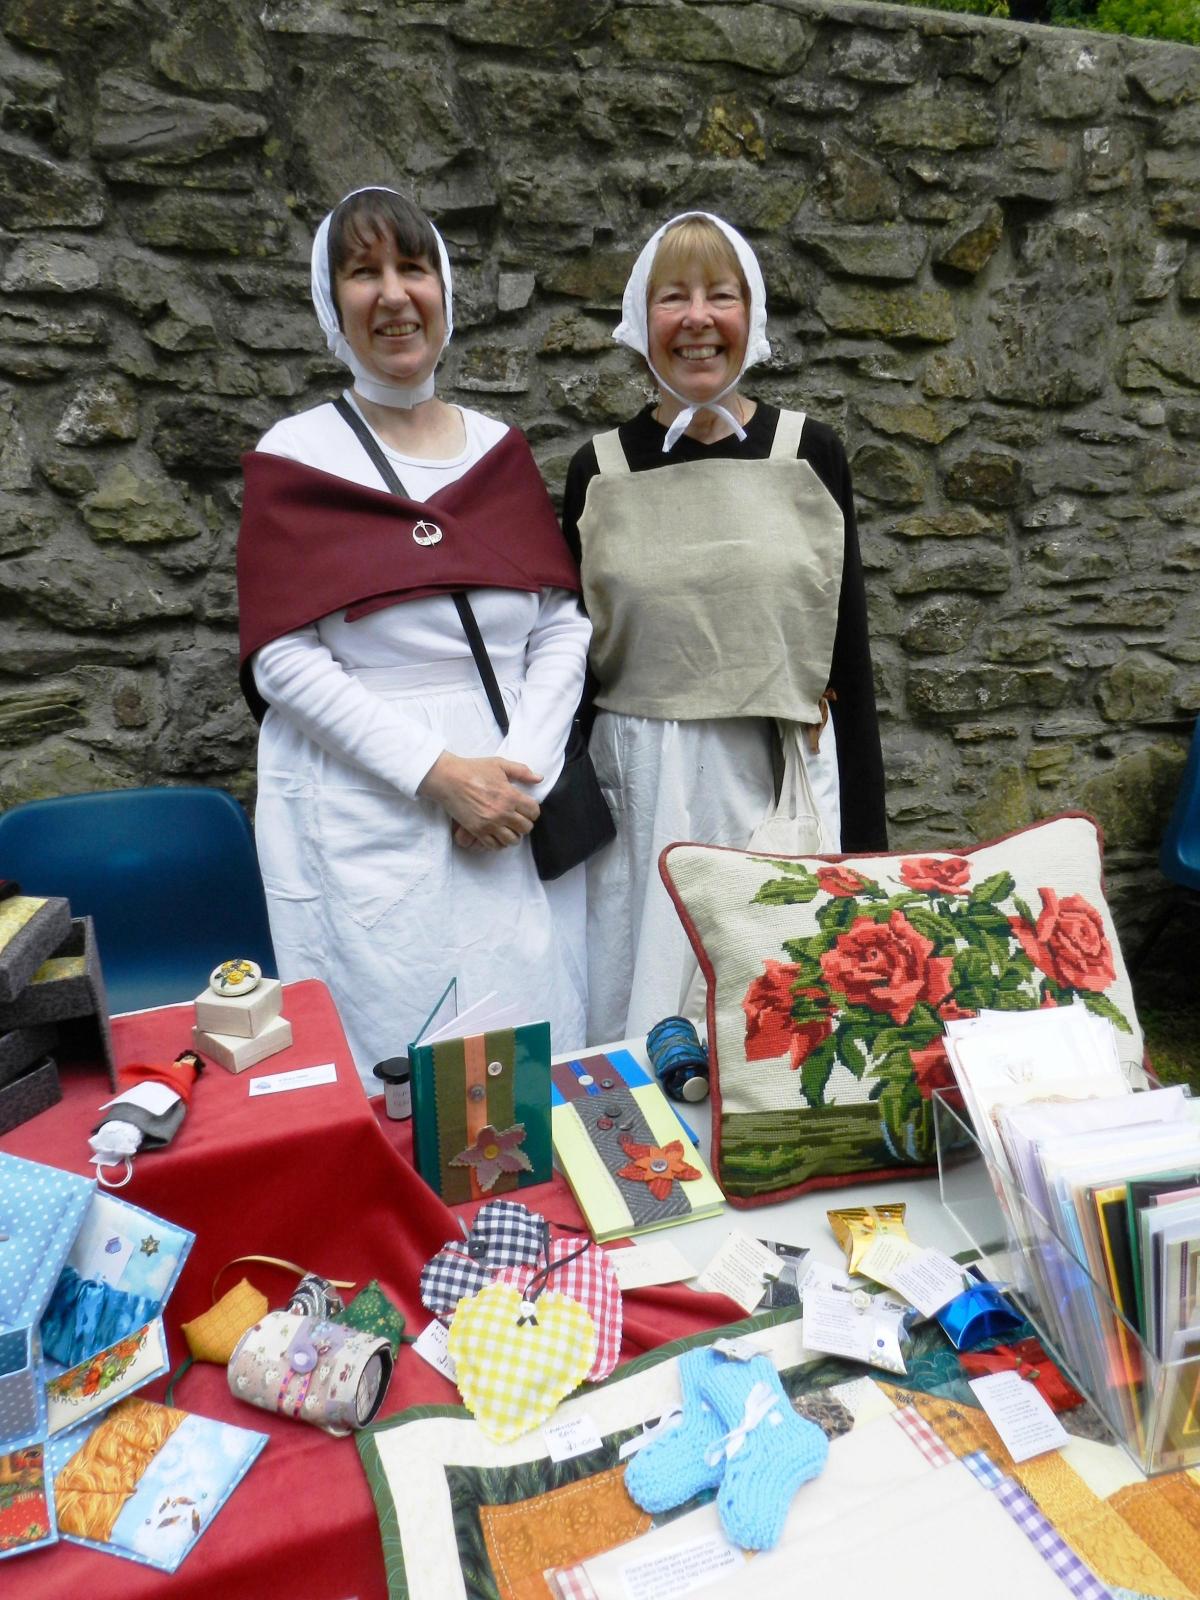 Linda Thomas, of 4 Buzy Bees, and Sandy McKenzie-Murdoch at Llandstadwell Medieval Fayre, Saturday June 20, 2015. 
PICTURE: Western Telegraph/Milford Mercury